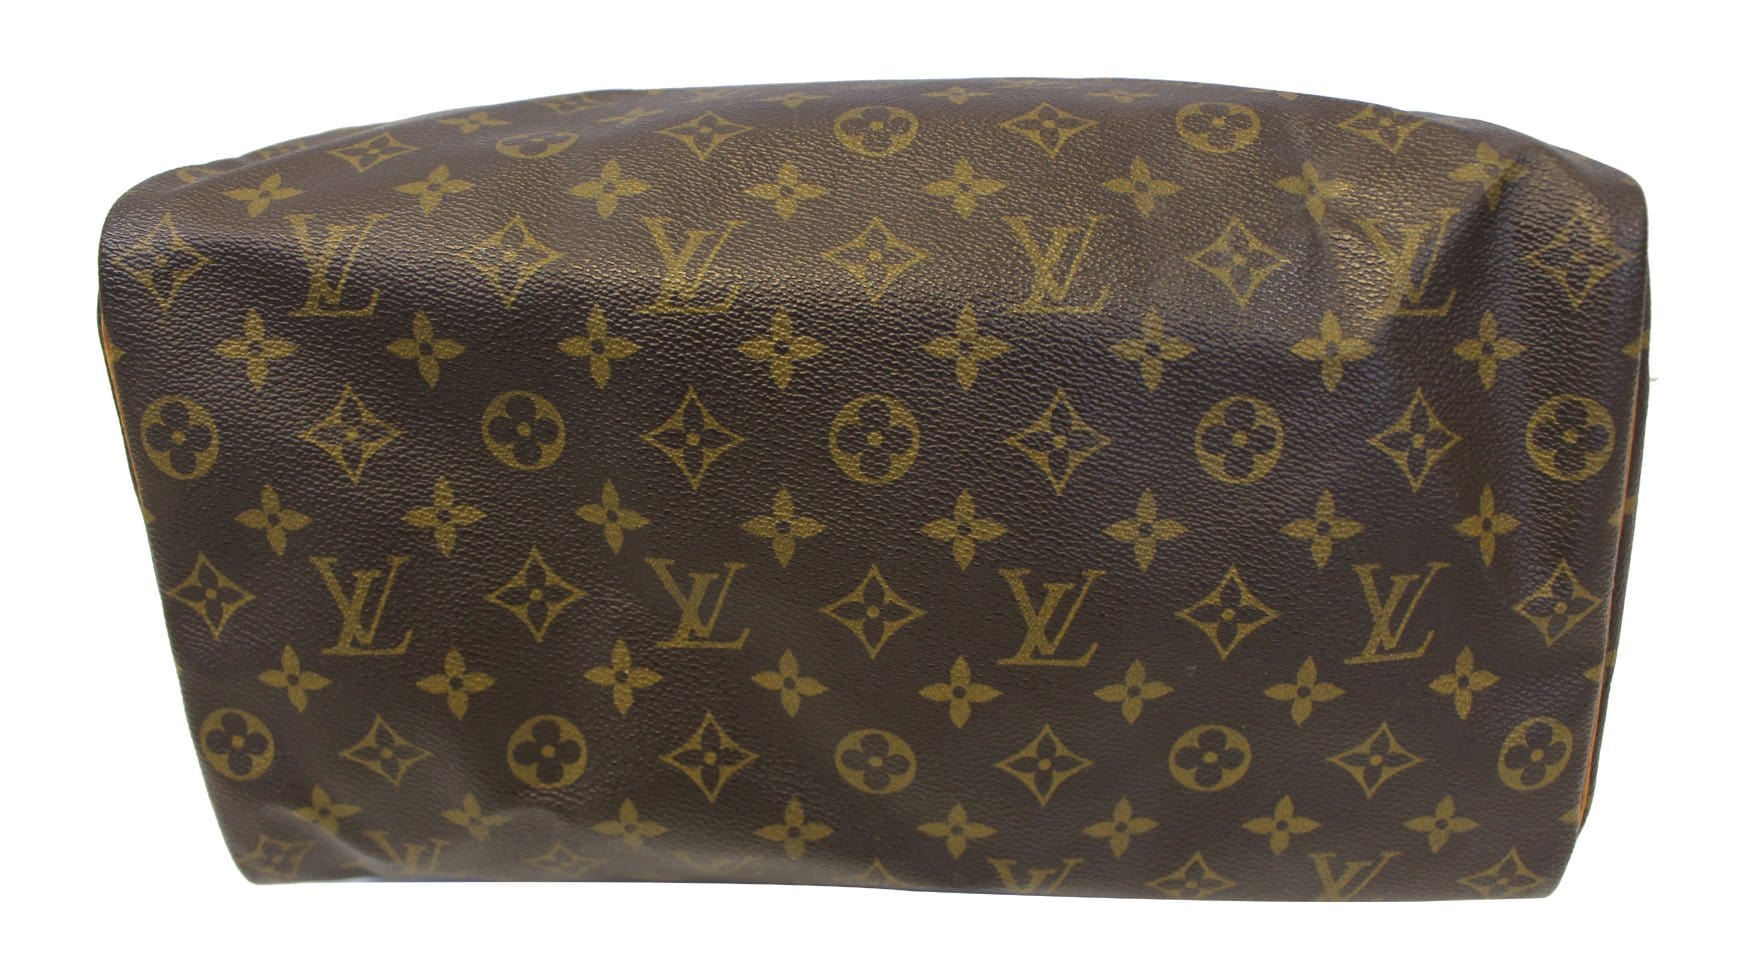 ❤️SOLD❤️ Louis Vuitton Monogram Speedy 35. This beauty is